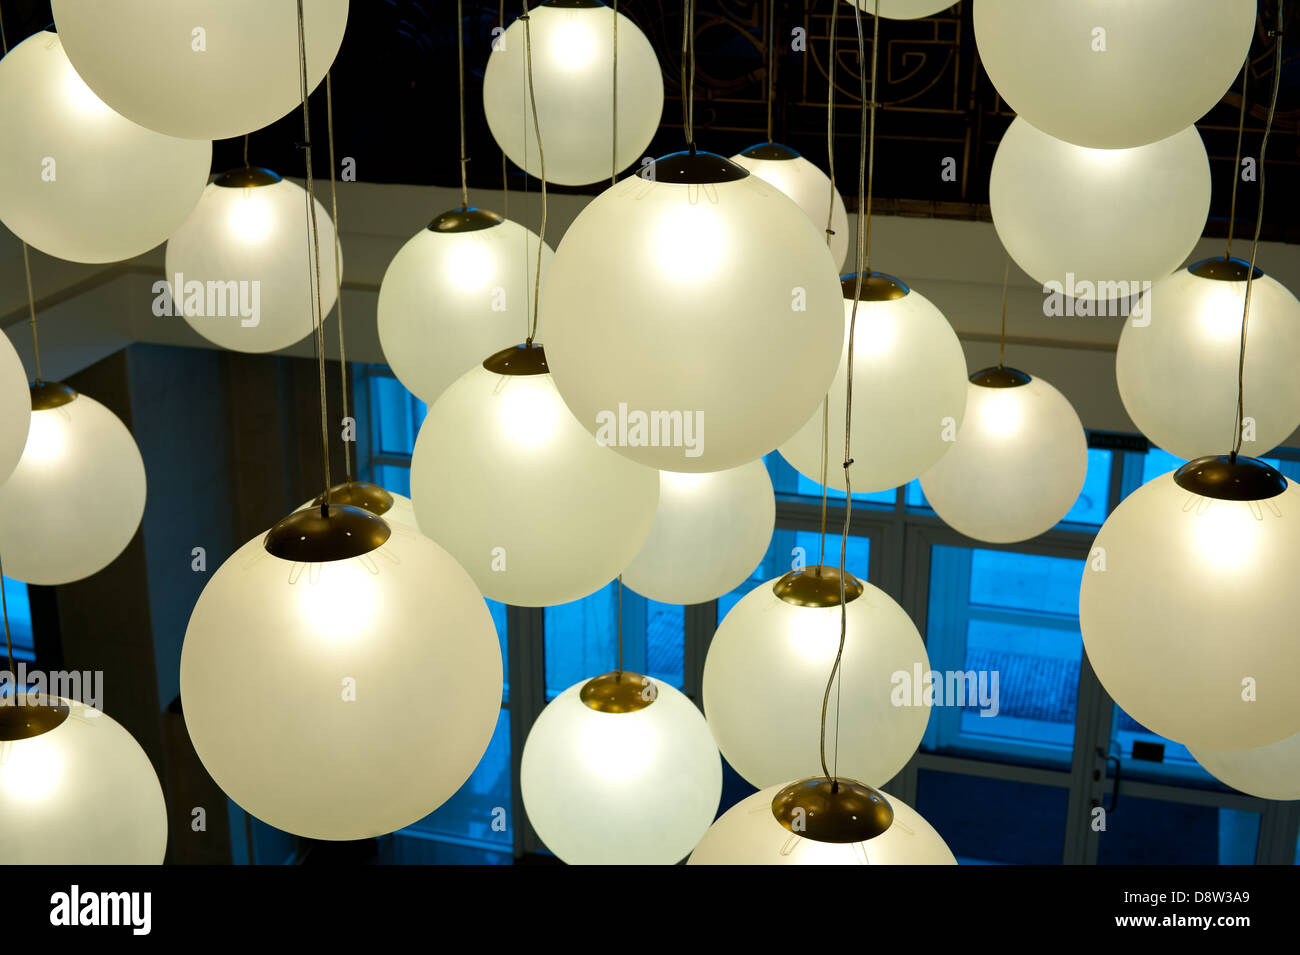 many round lamps Stock Photo